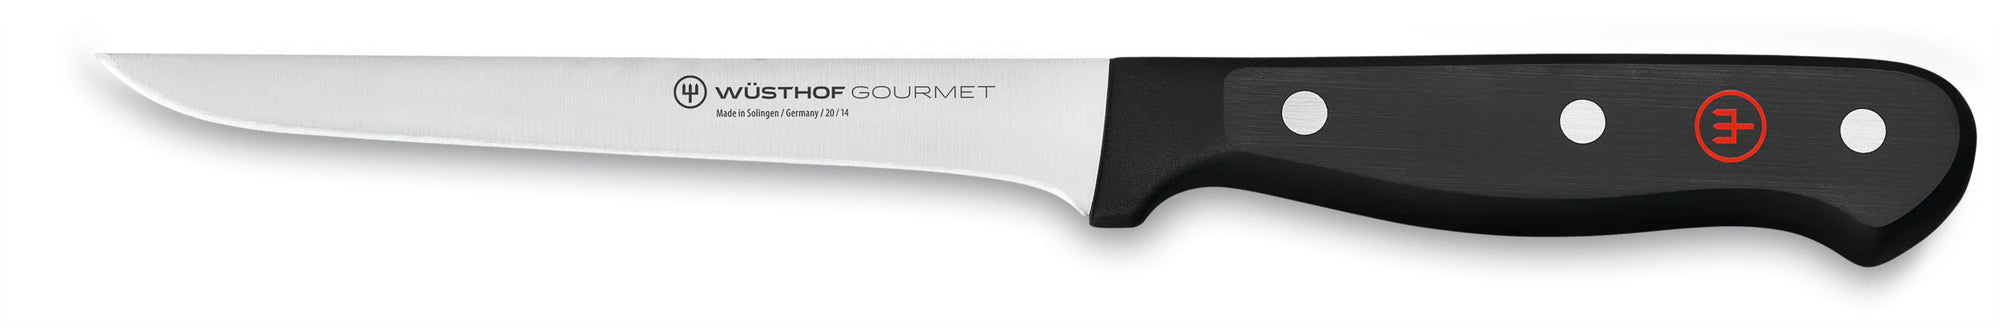 Wusthof Gourmet Boning Knife, Stiff, 6-inch (16cm) - 4606-16